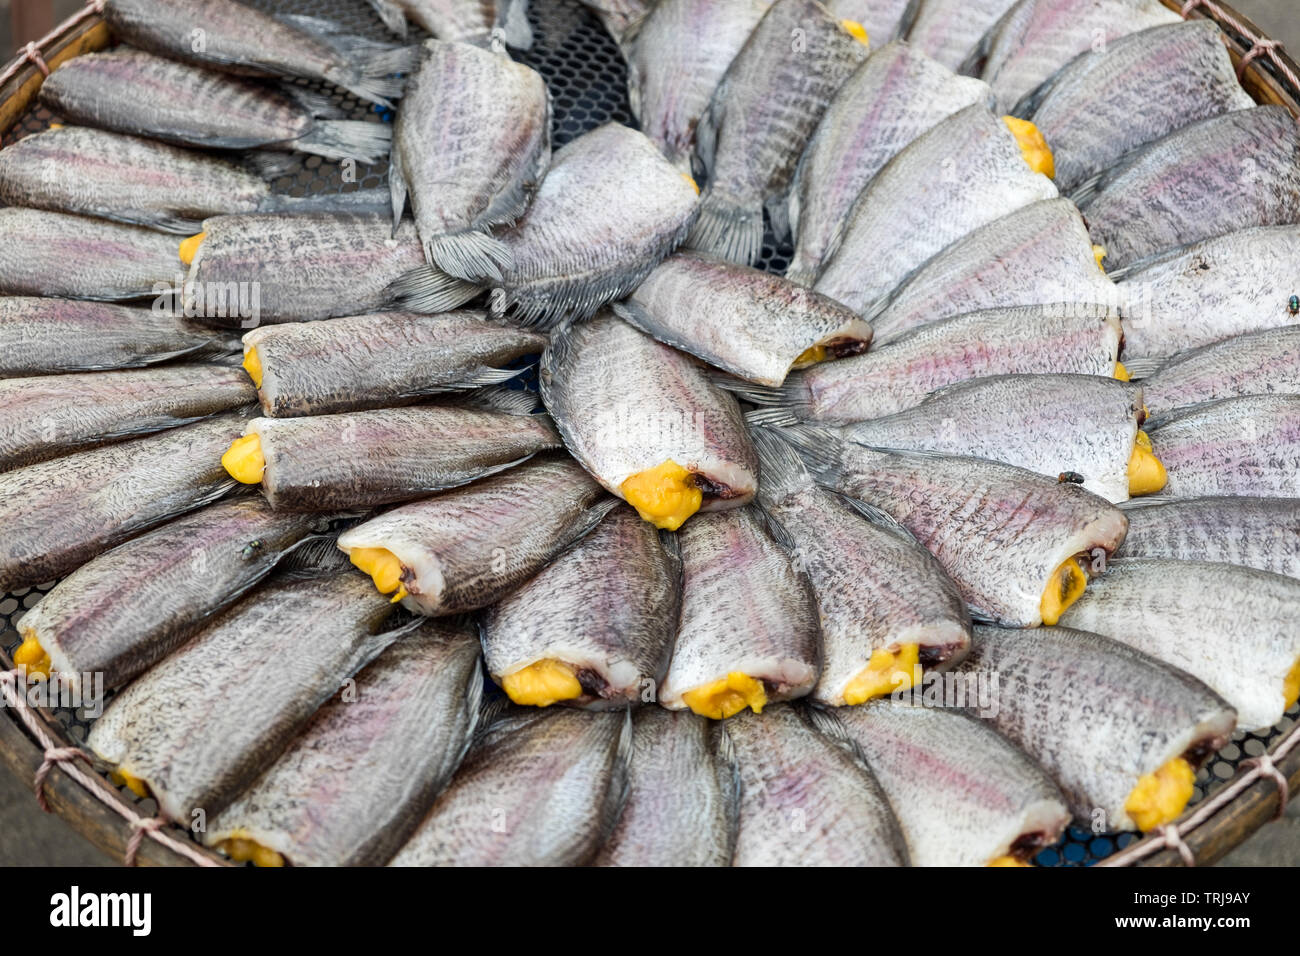 Snakeskin Gourami Fish,Pla Salit fish,Trichogaster pectoralis,dry overlay local cuisine in thailand Stock Photo